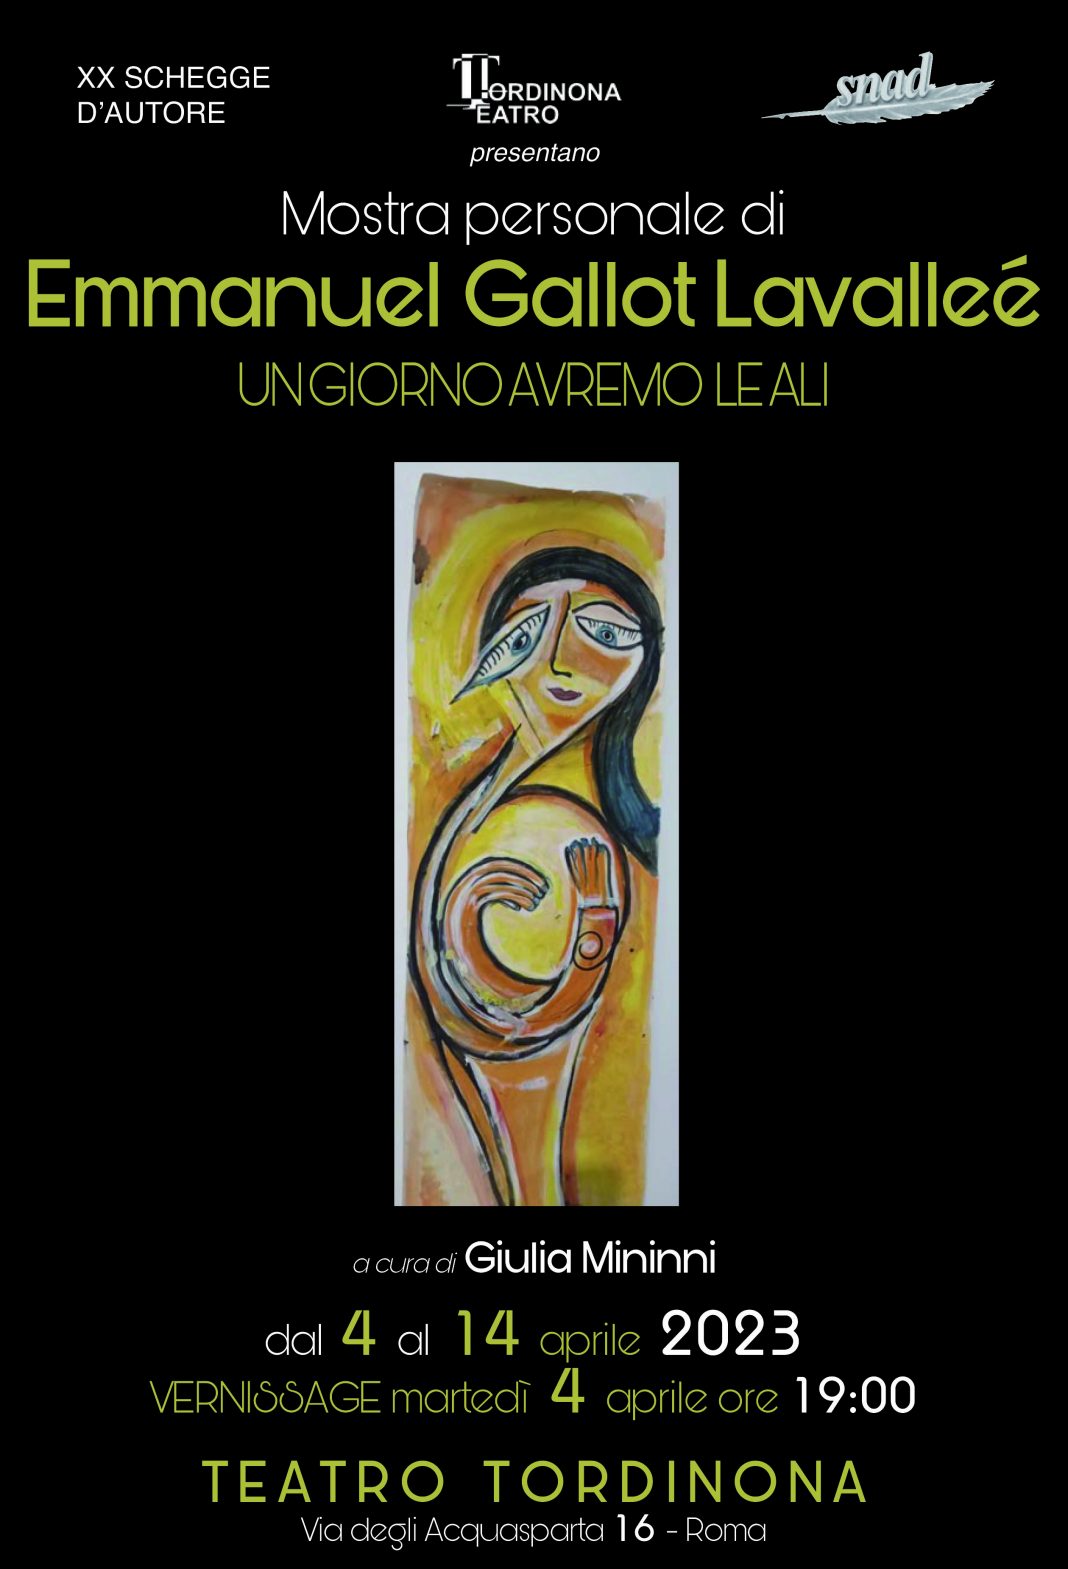 Emmanuel Gallot Lavalleehttps://www.exibart.com/repository/media/formidable/11/img/2af/locandina_di-lavallèe-1068x1569.jpg